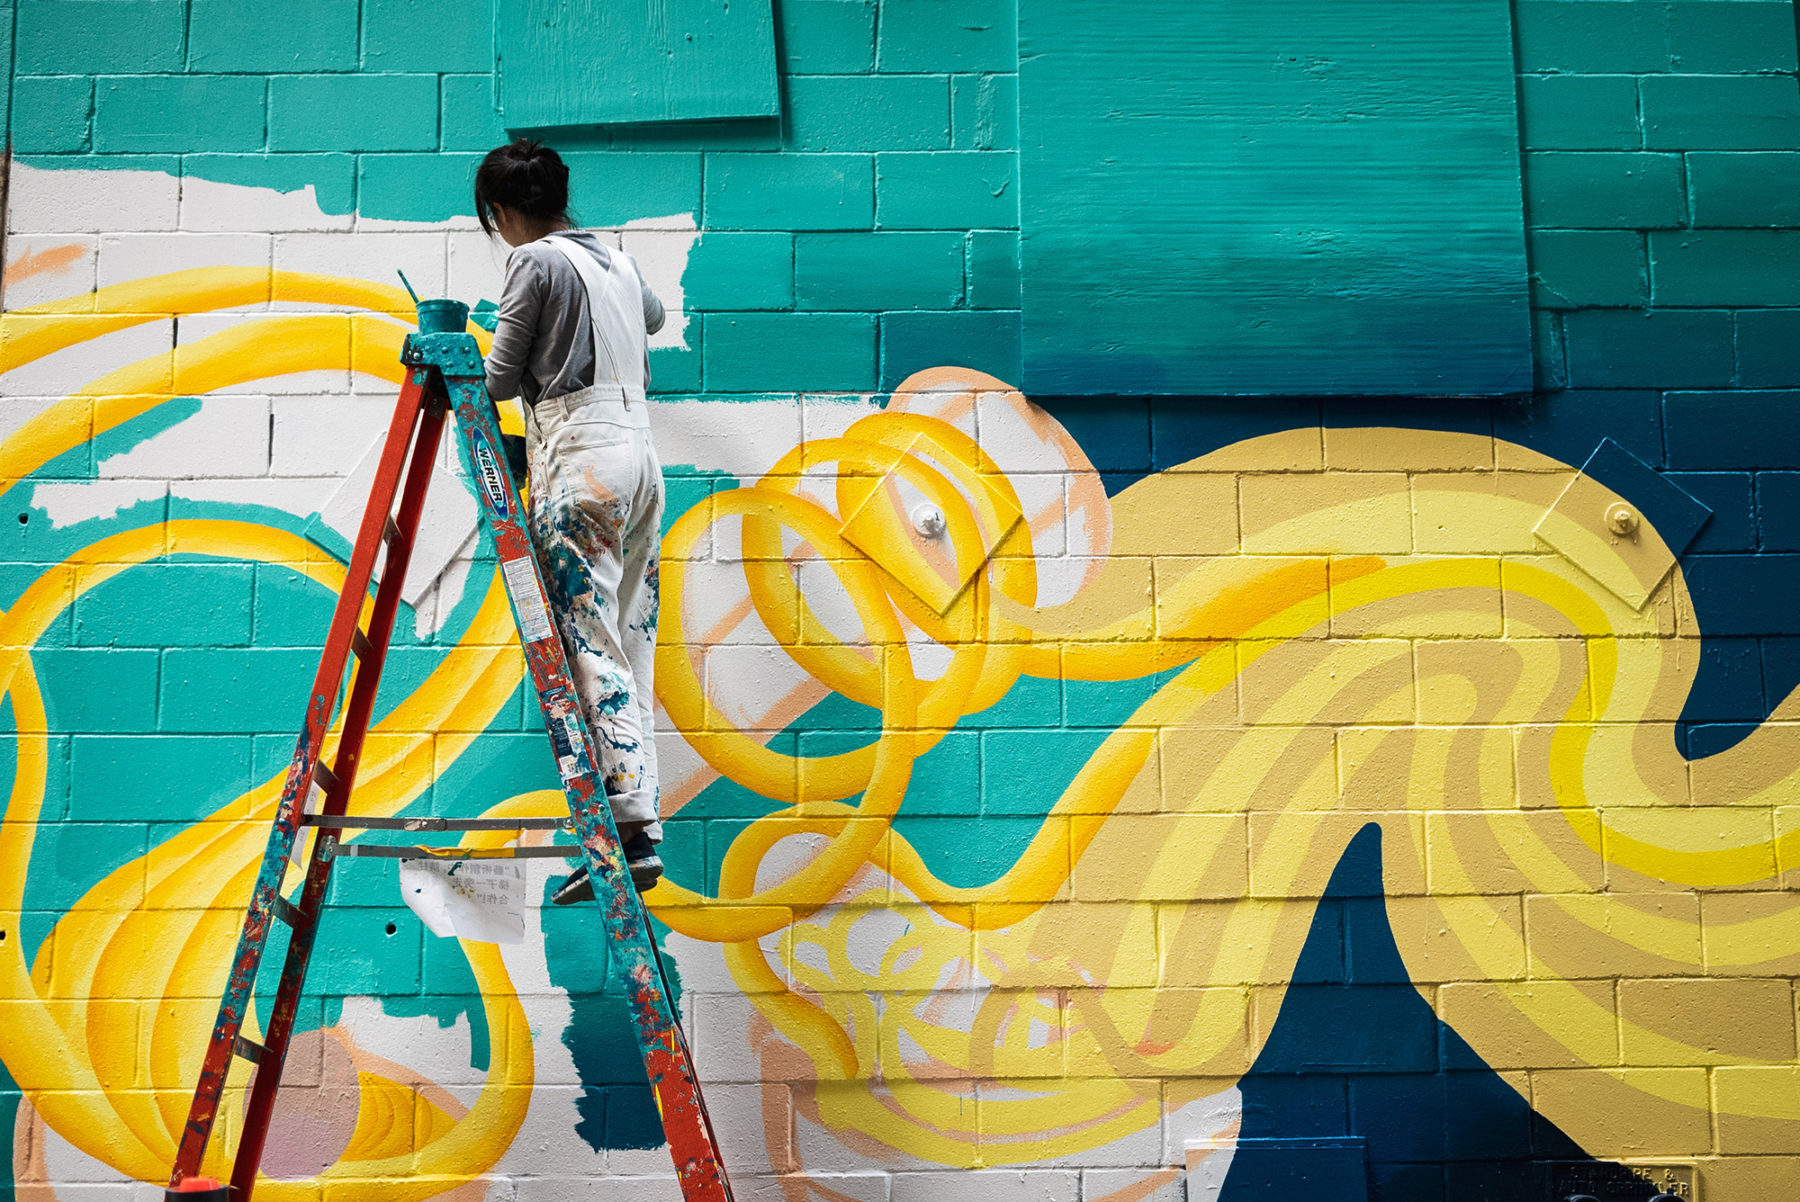 Artist on ladder fills in white space on mural